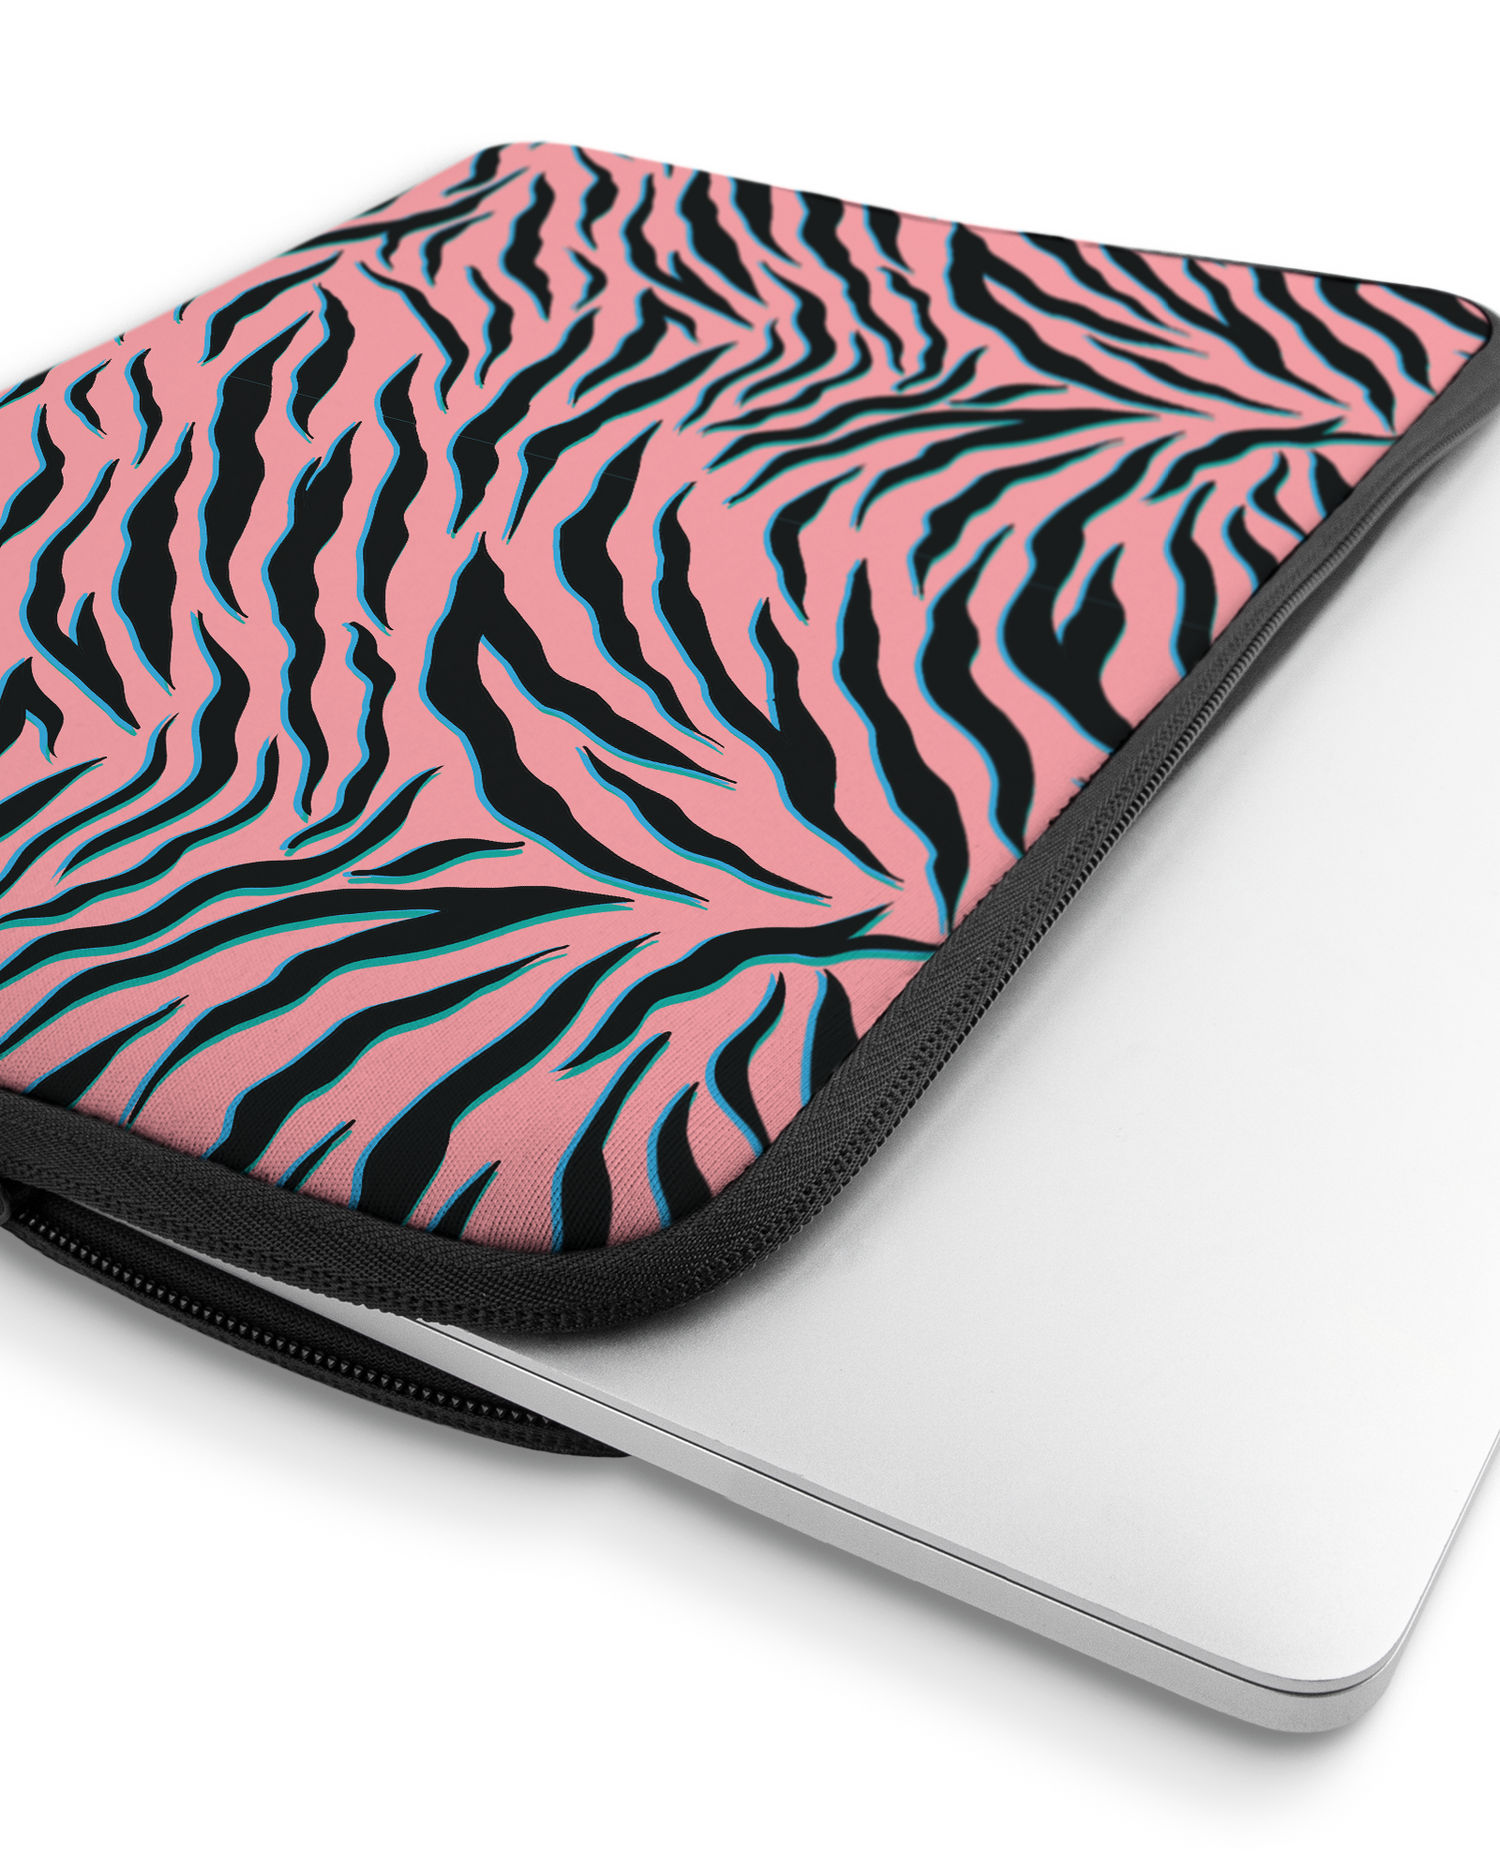 Pink Zebra Laptophülle 16 Zoll mit Gerät im Inneren